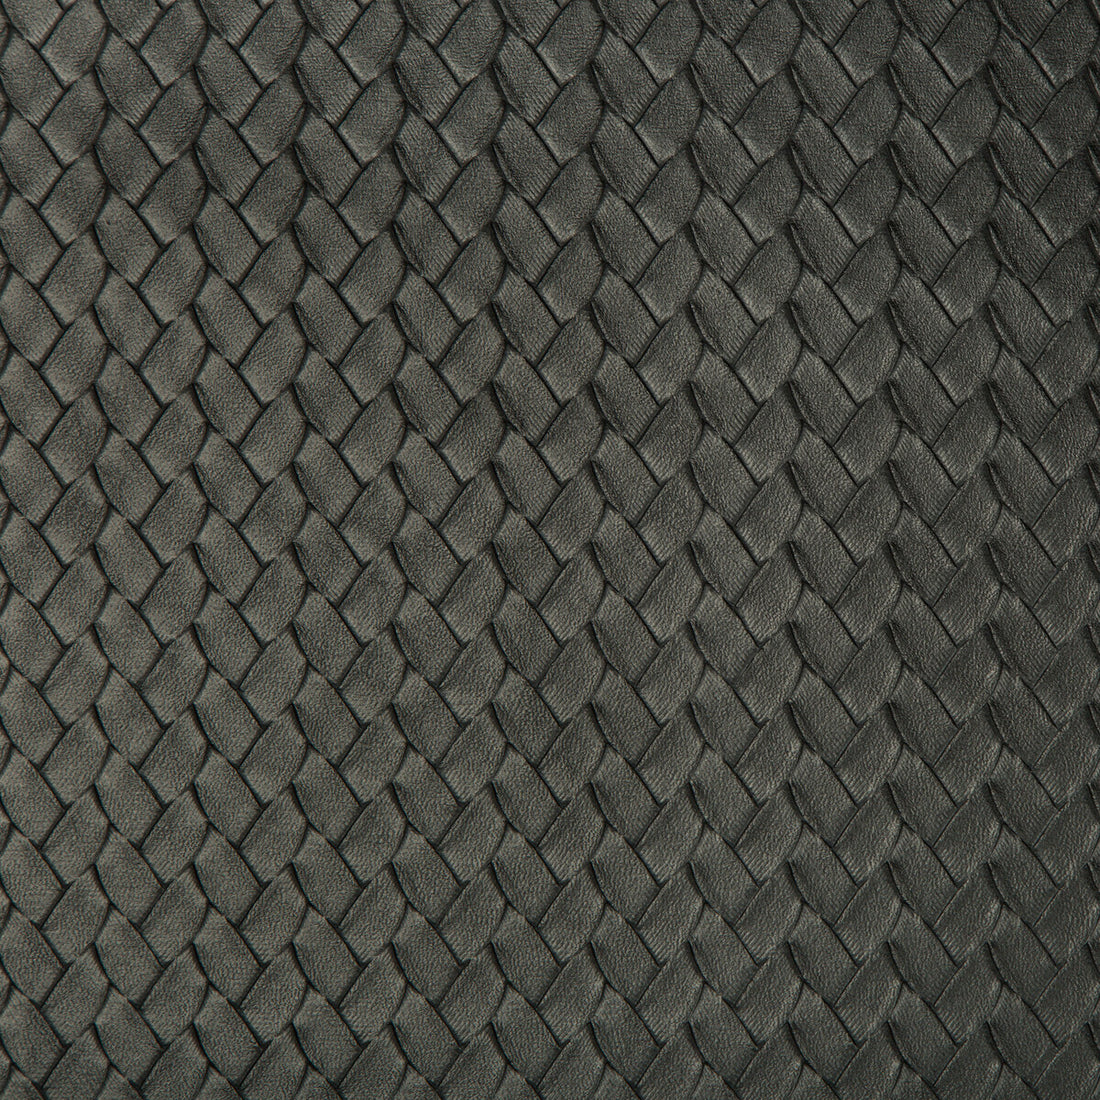 Kravet Design fabric in verlaine-8 color - pattern VERLAINE.8.0 - by Kravet Design